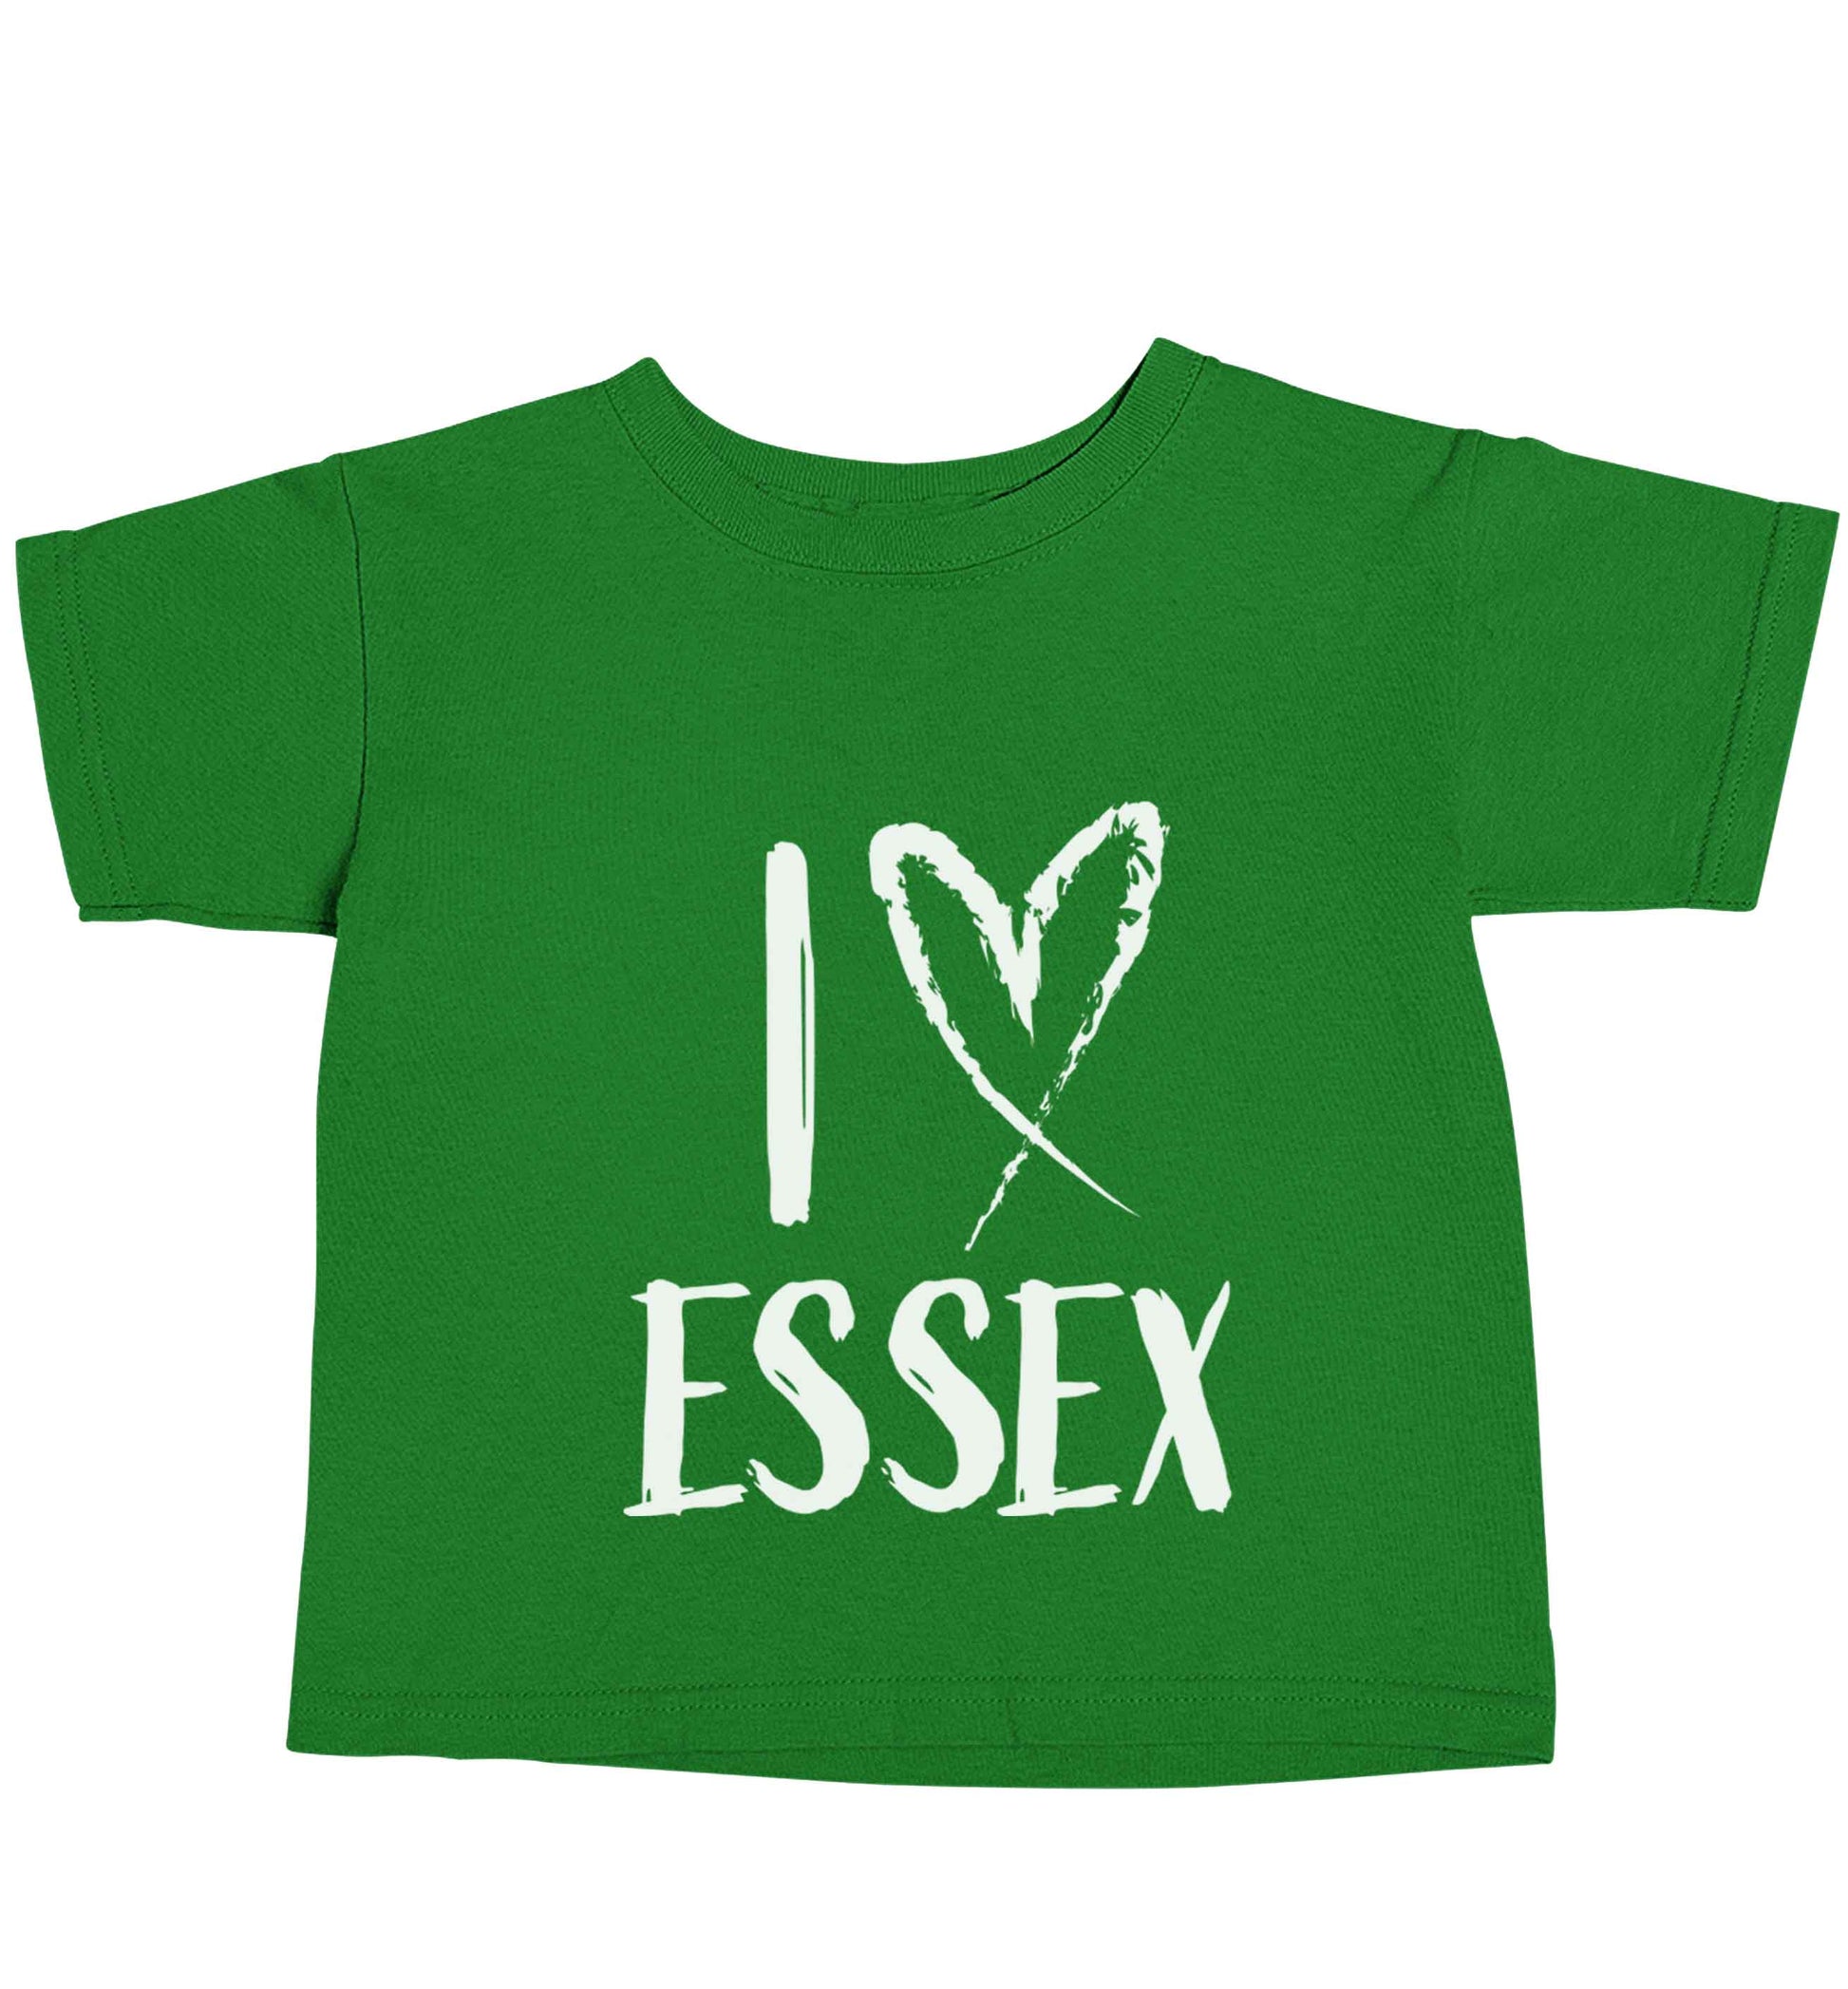 I love Essex green baby toddler Tshirt 2 Years